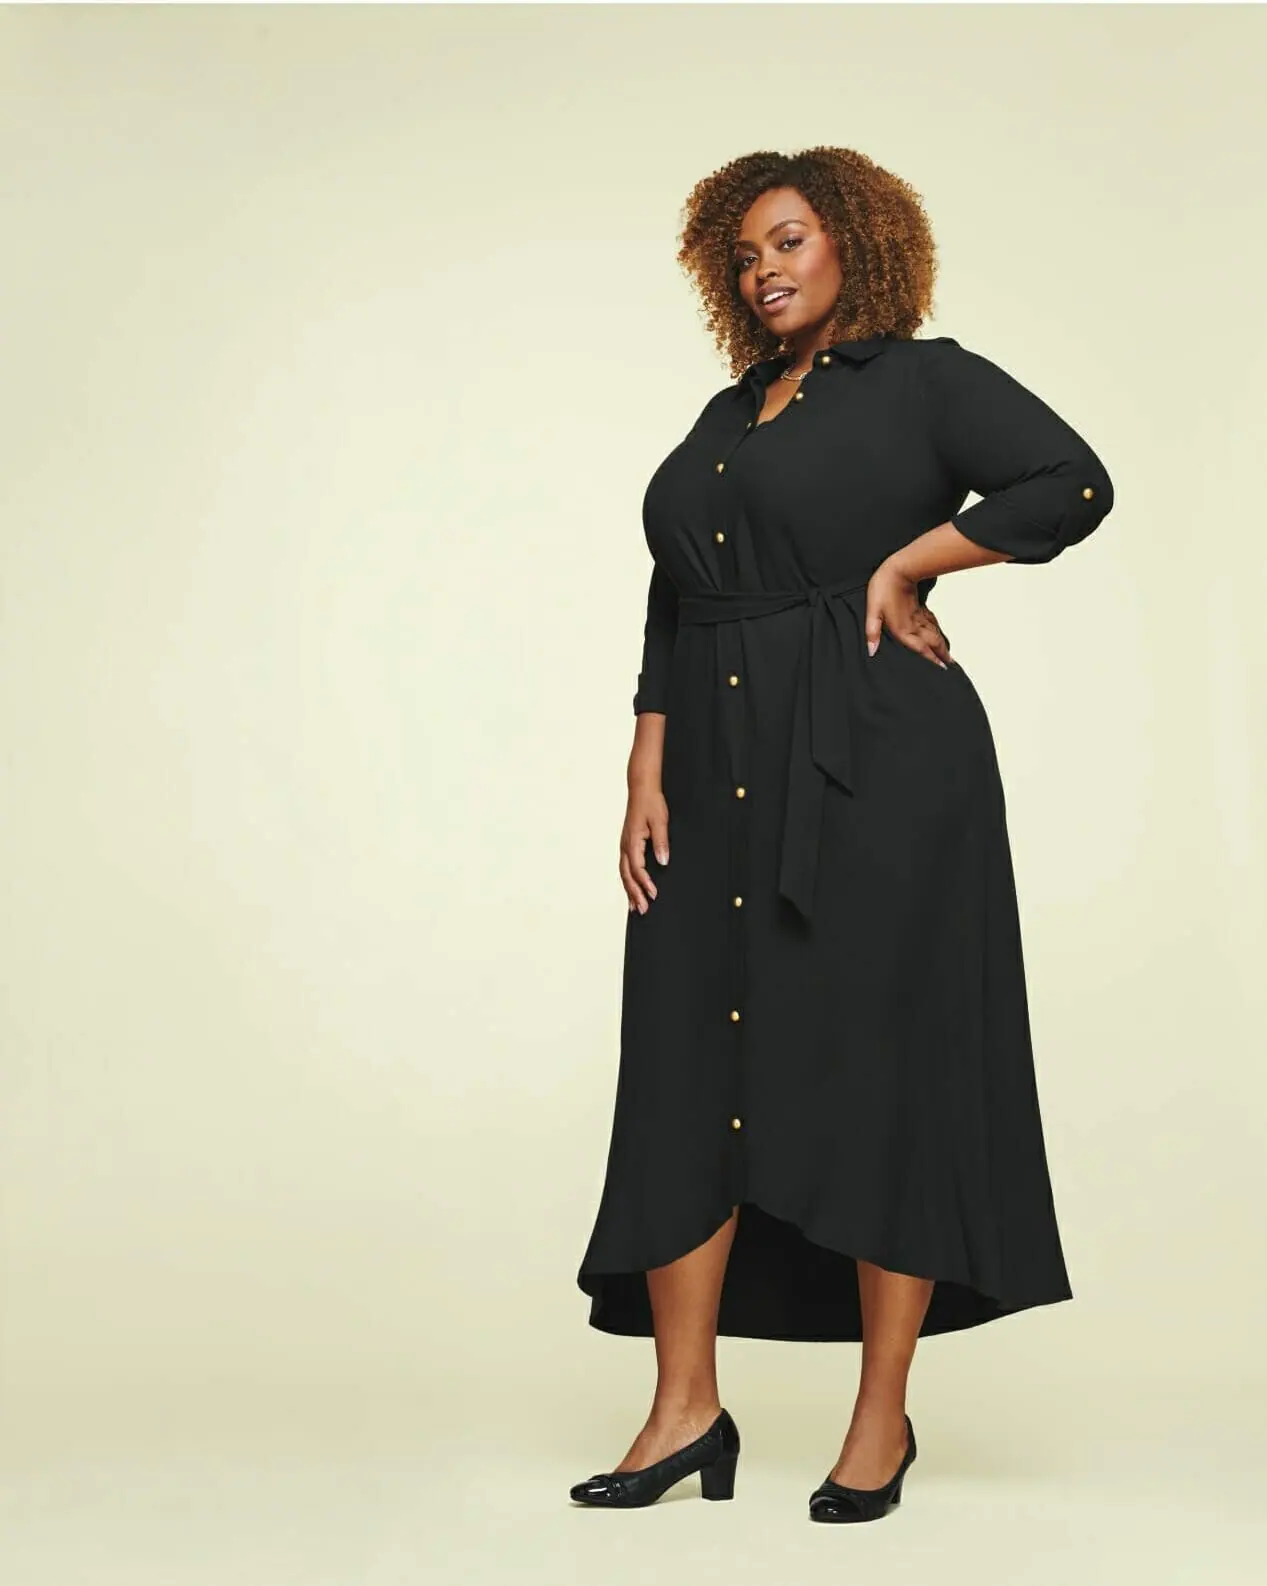 Dresses That Hide Belly Fat For Curvy Women Vintage Cocktail Flattering  Black Floral Knee Length Dress To Hide Tummy Stomach Bulge S